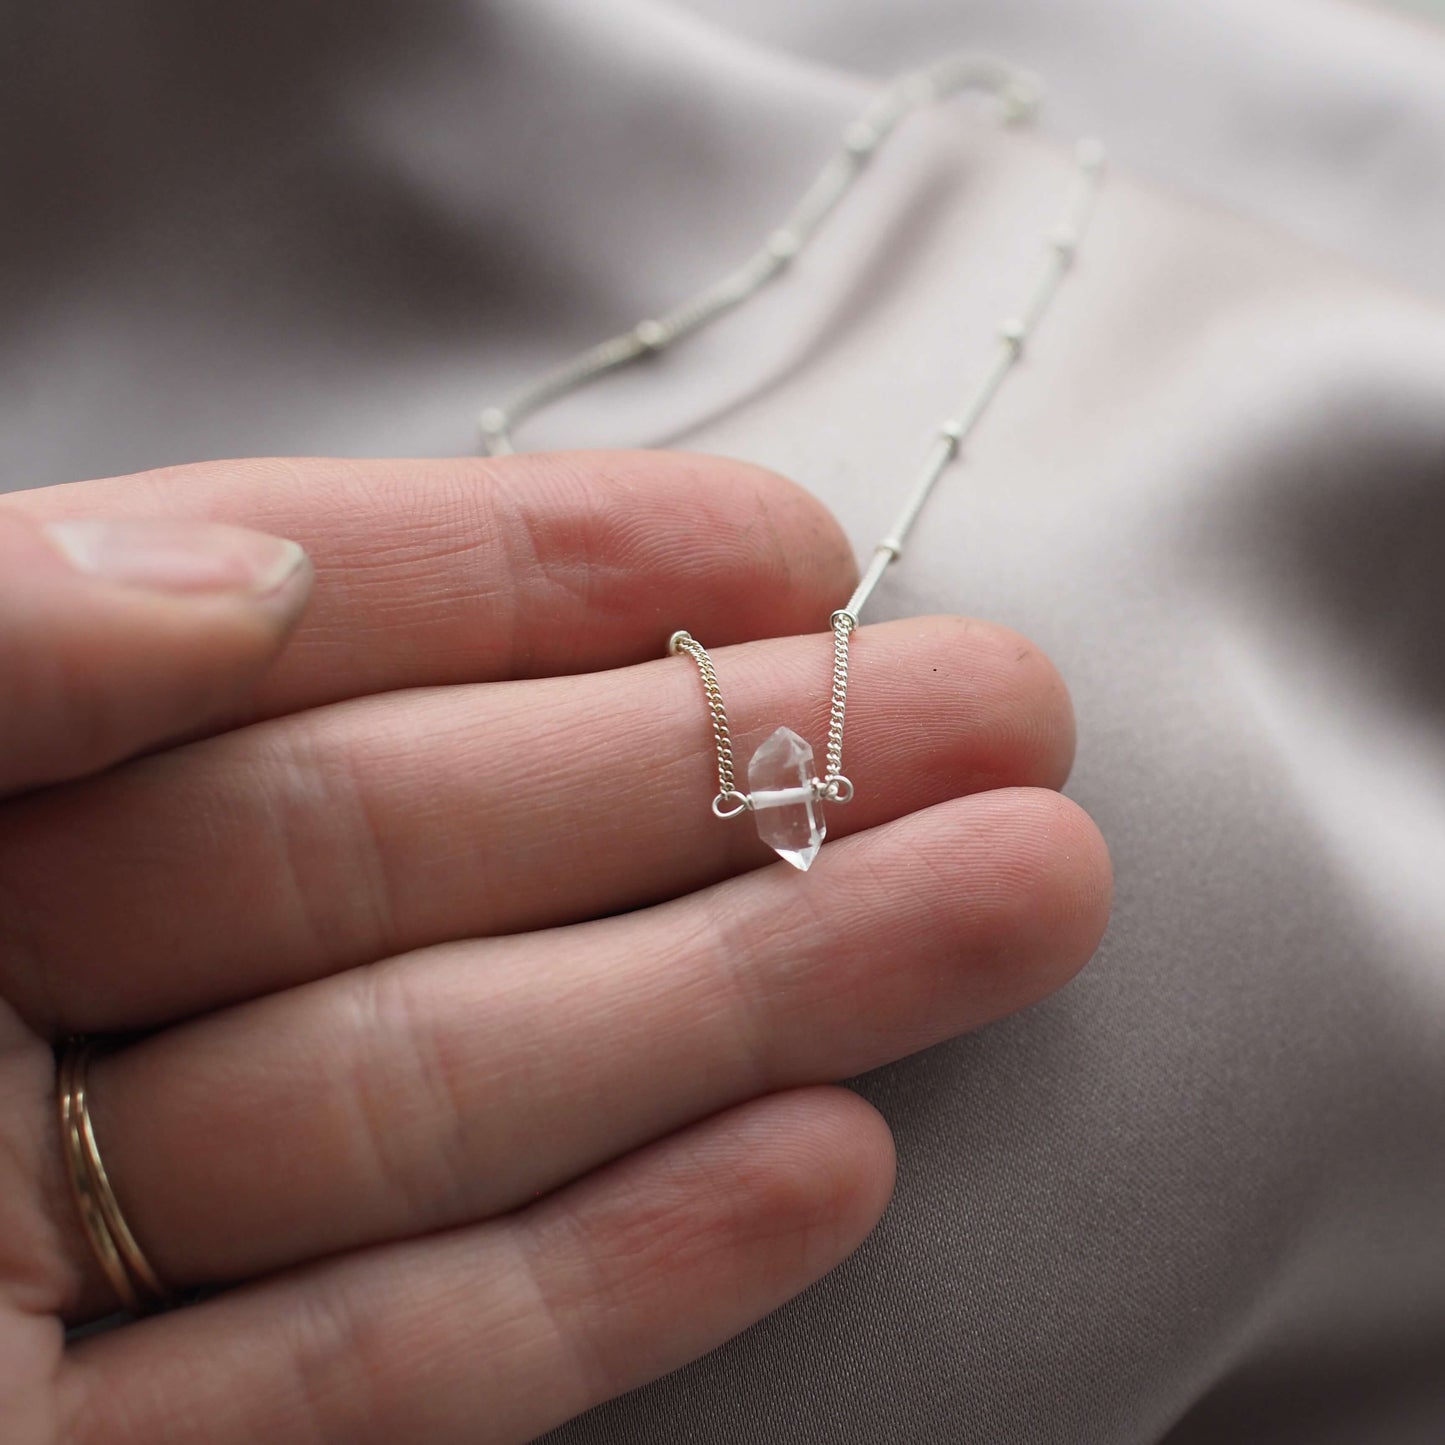 Tiny Clear Quartz Silver Necklace